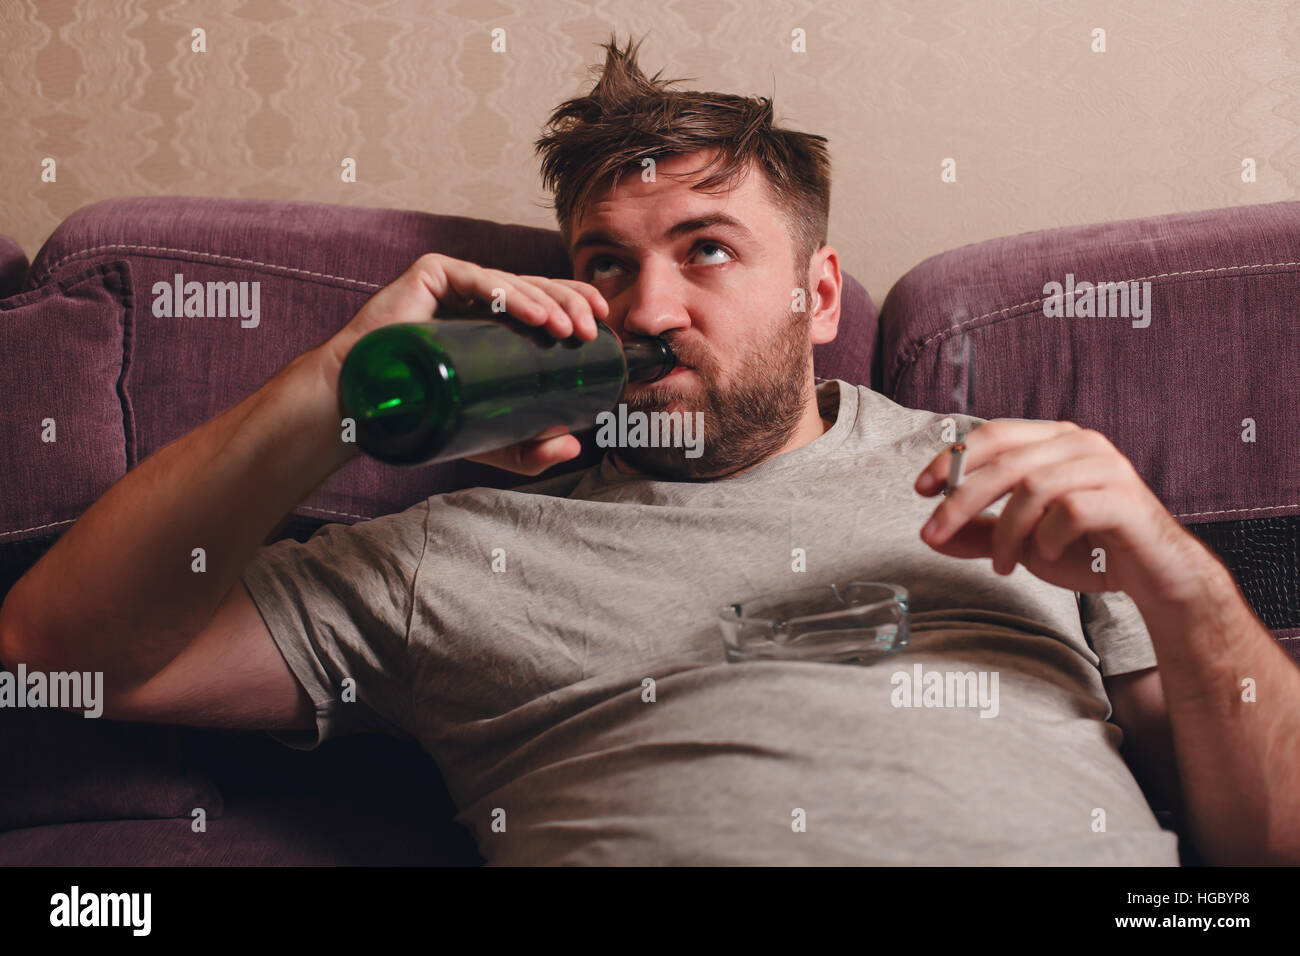 Drunk man drink alcohol. Stock Photo